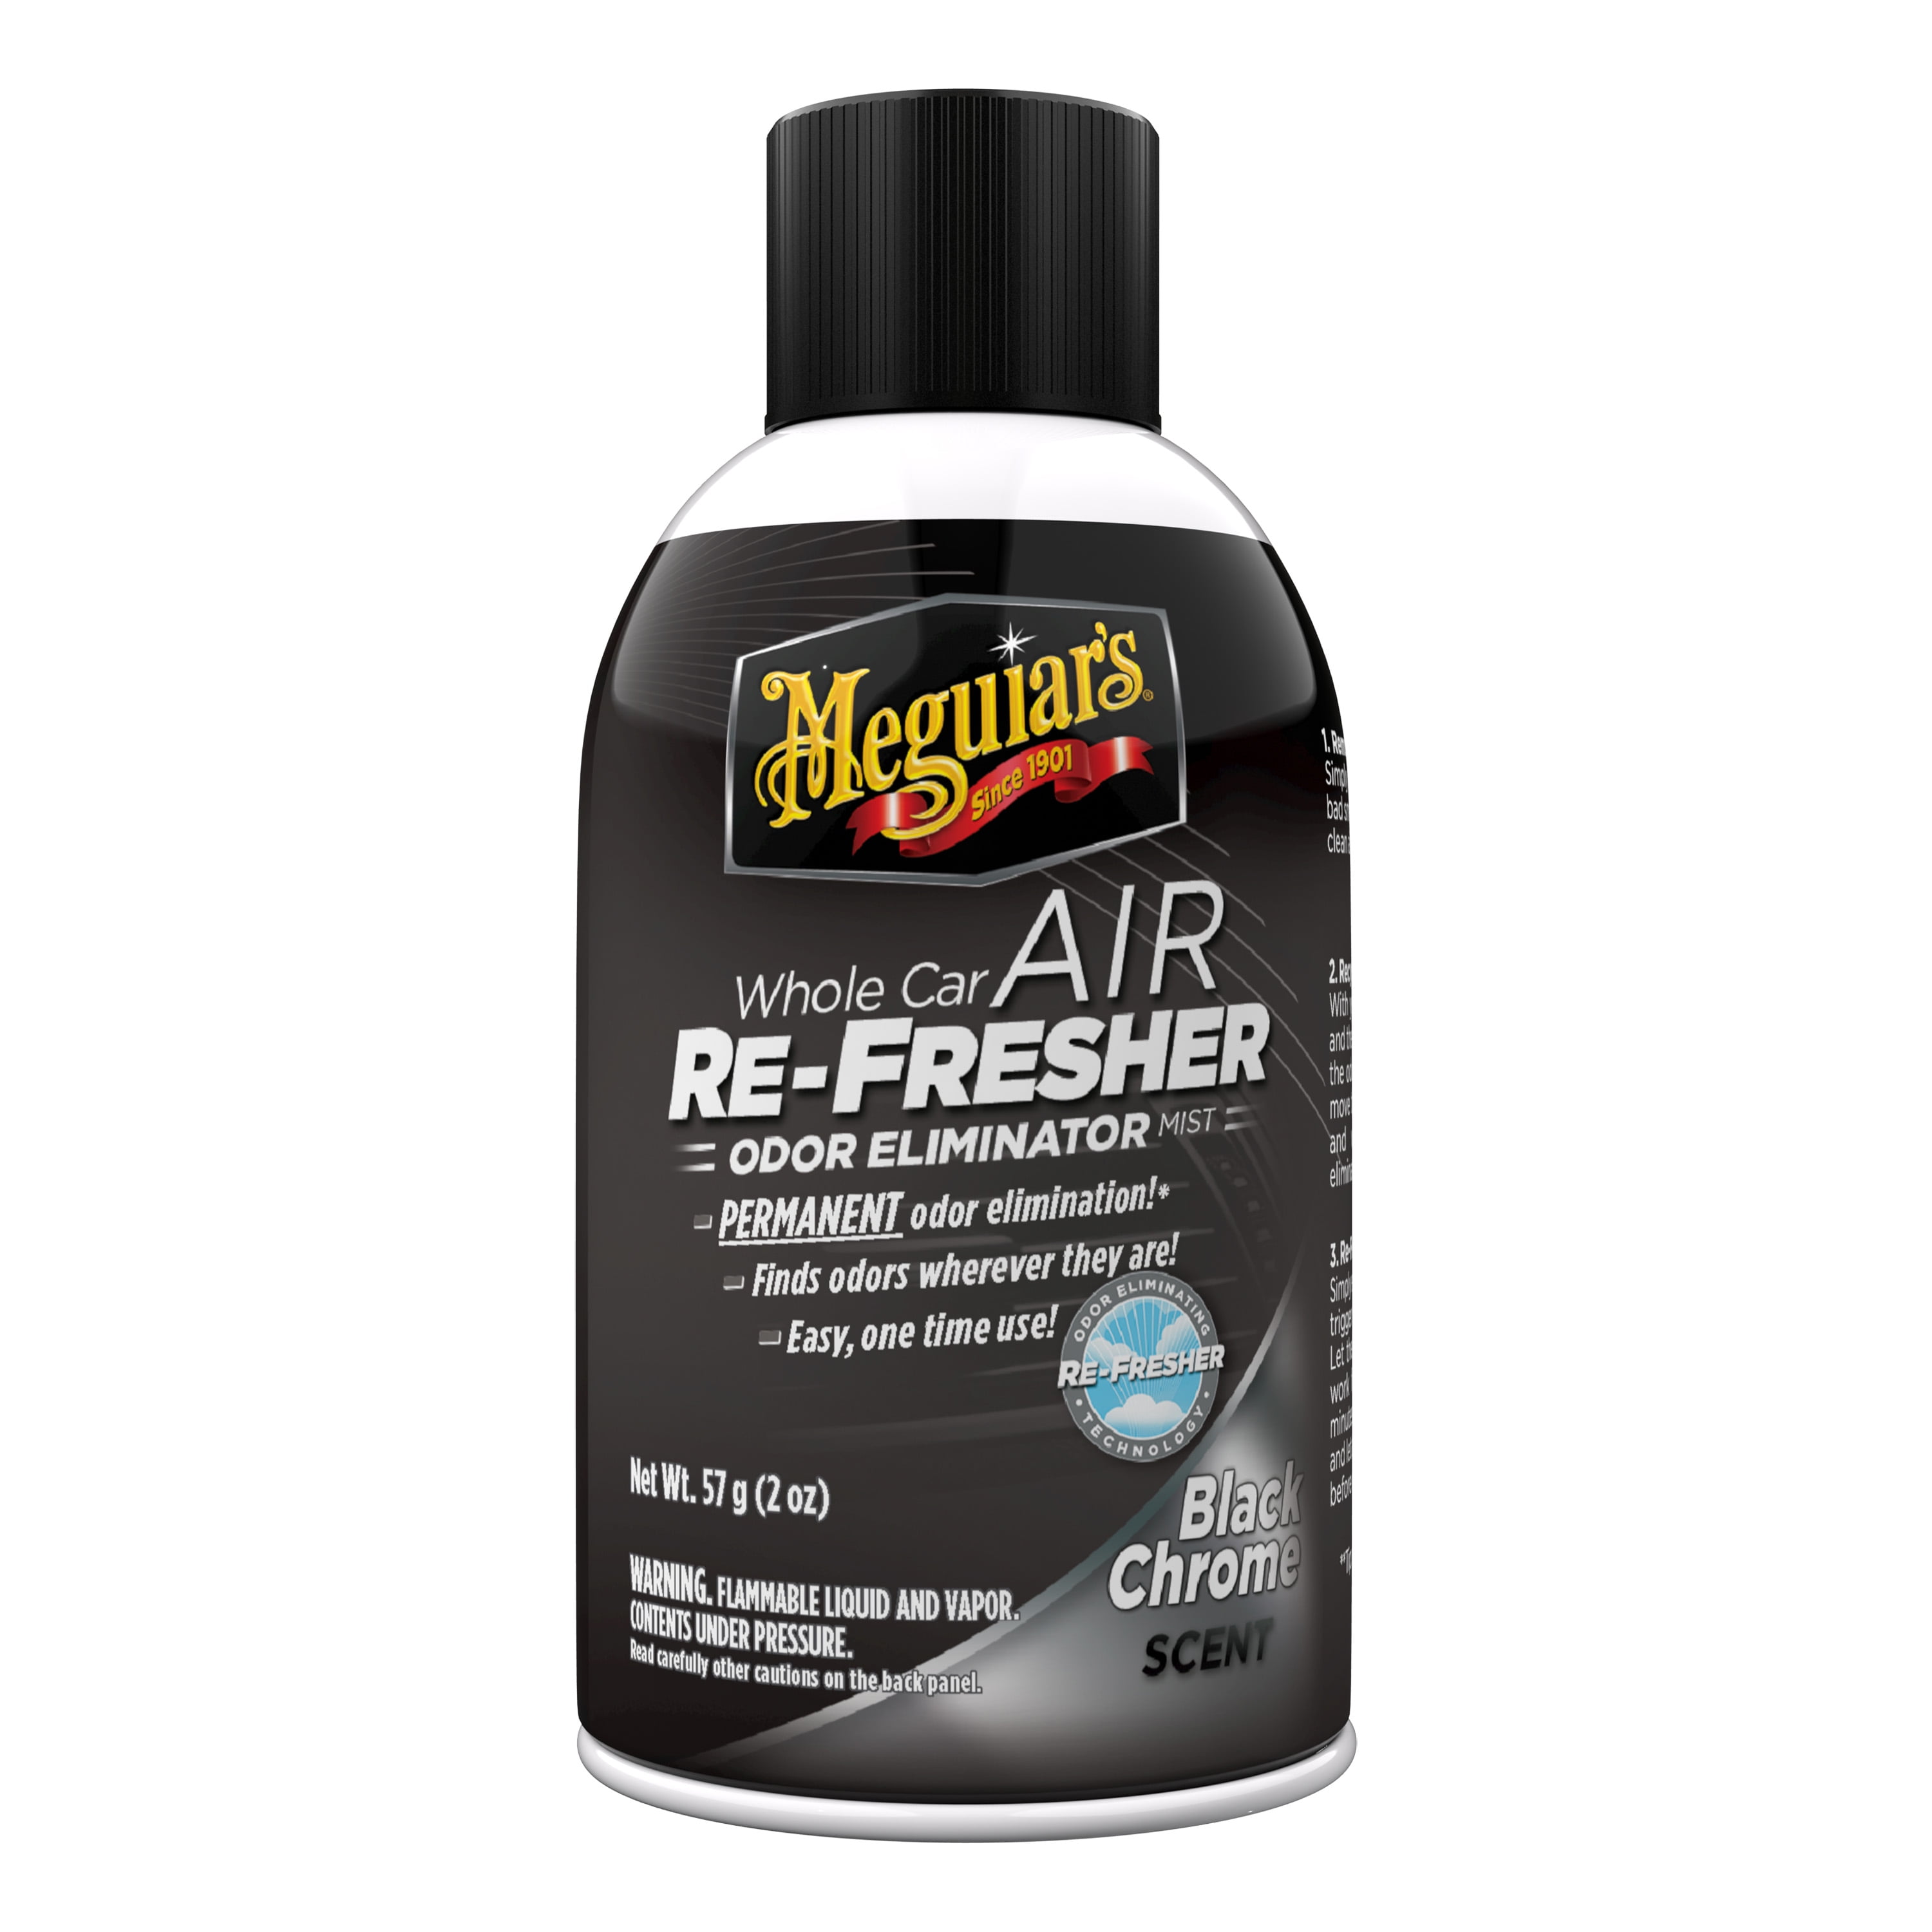 Meguiar's Whole Car Air Re-Fresher Odor Eliminator Mist – New Car Scent – G16402, 2 Oz(pack of 6)